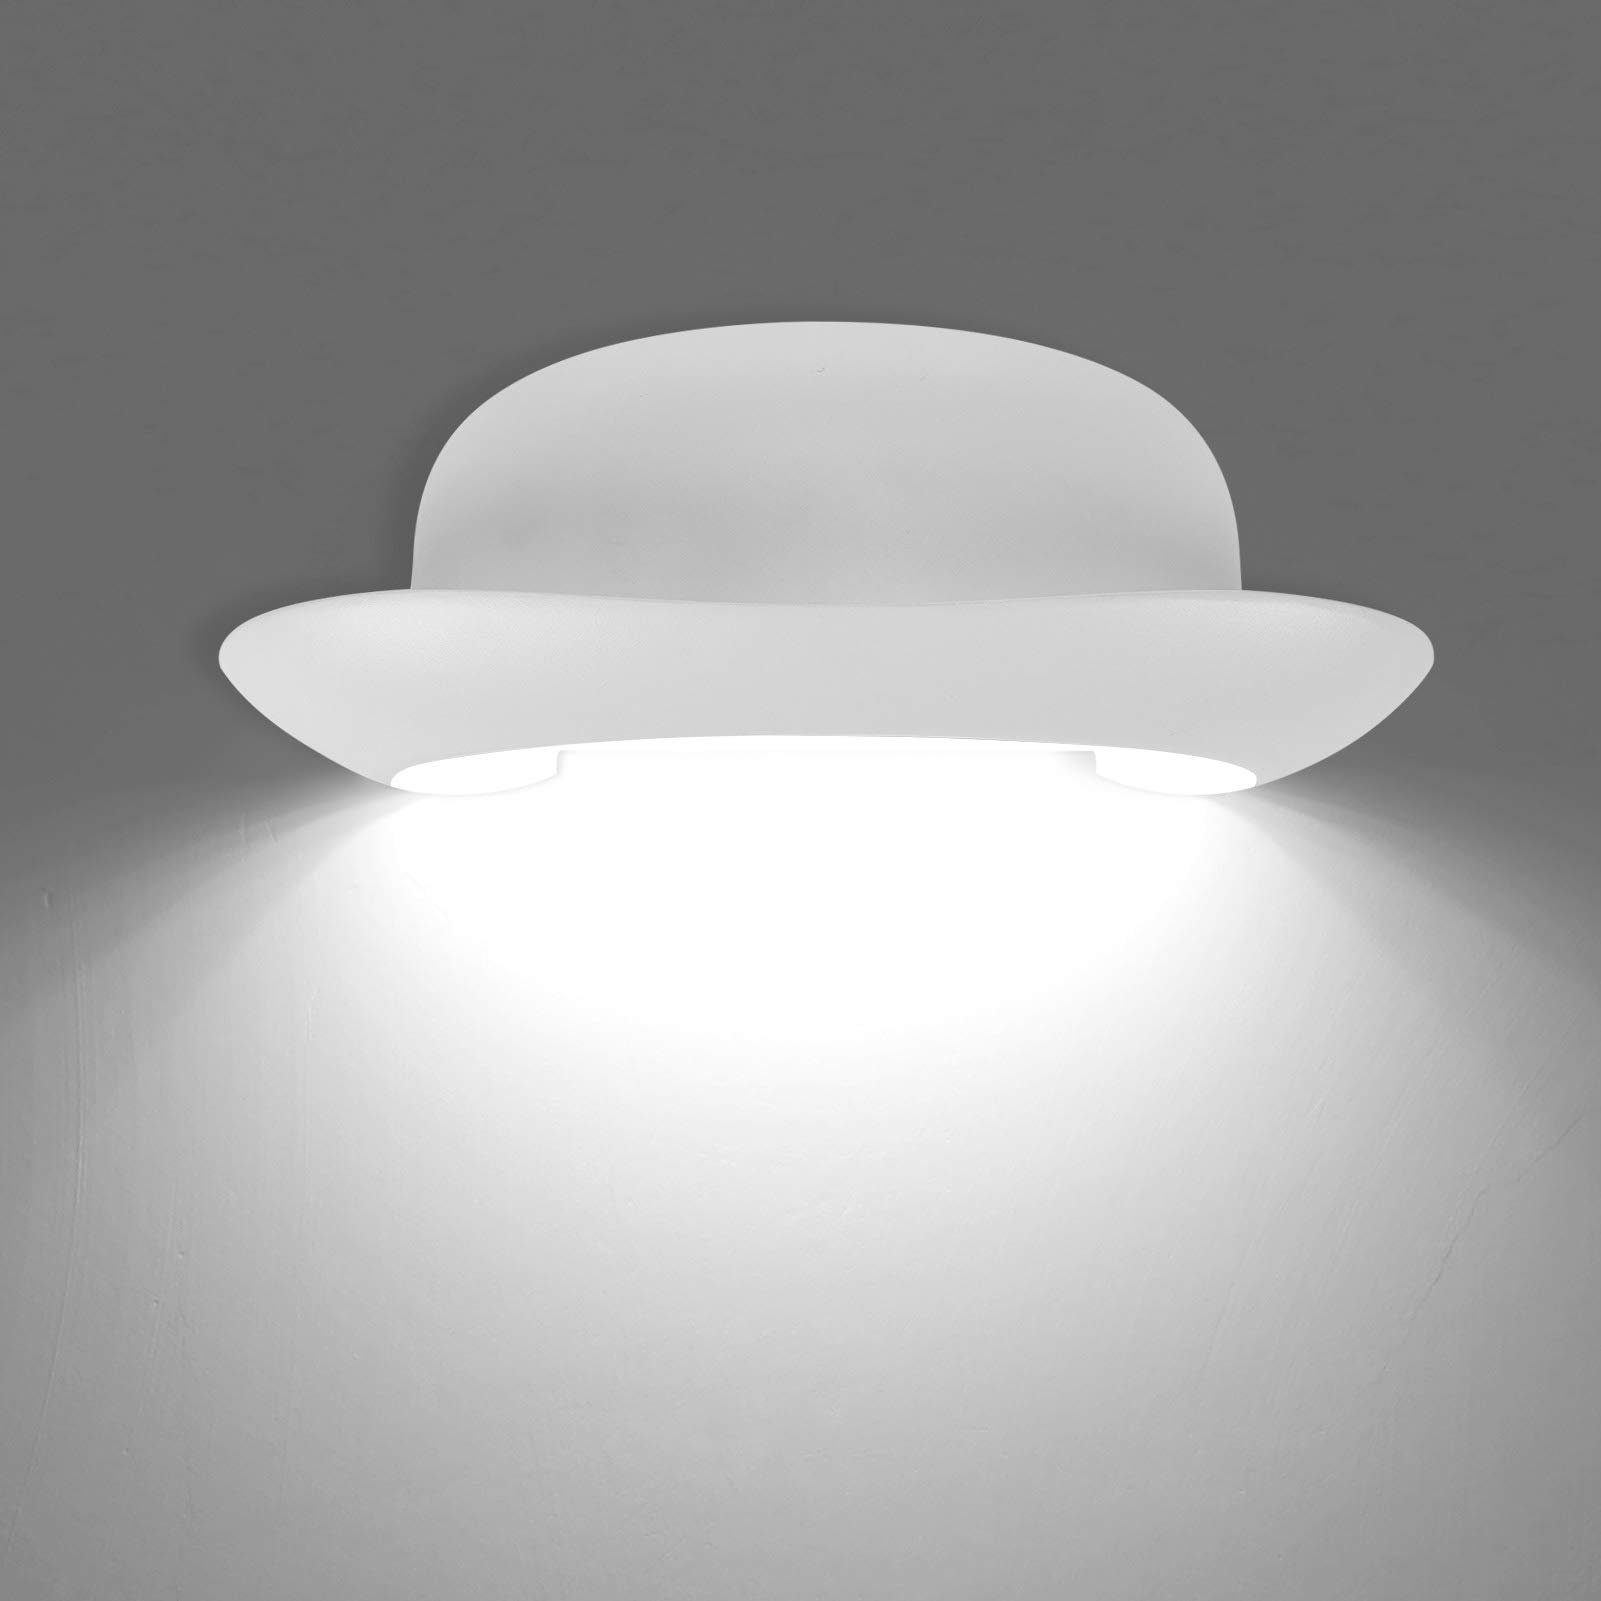 KAWELL Kreativ 12W Modern Wandlampe LED Wandleuchte Wasserdicht IP65 Aluminium Wandbeleuchtung Innen Außen für Badezimmer Treppen Veranda Flur Schlafzimmer Korridor Wohnzimmer, Weiß 6000K